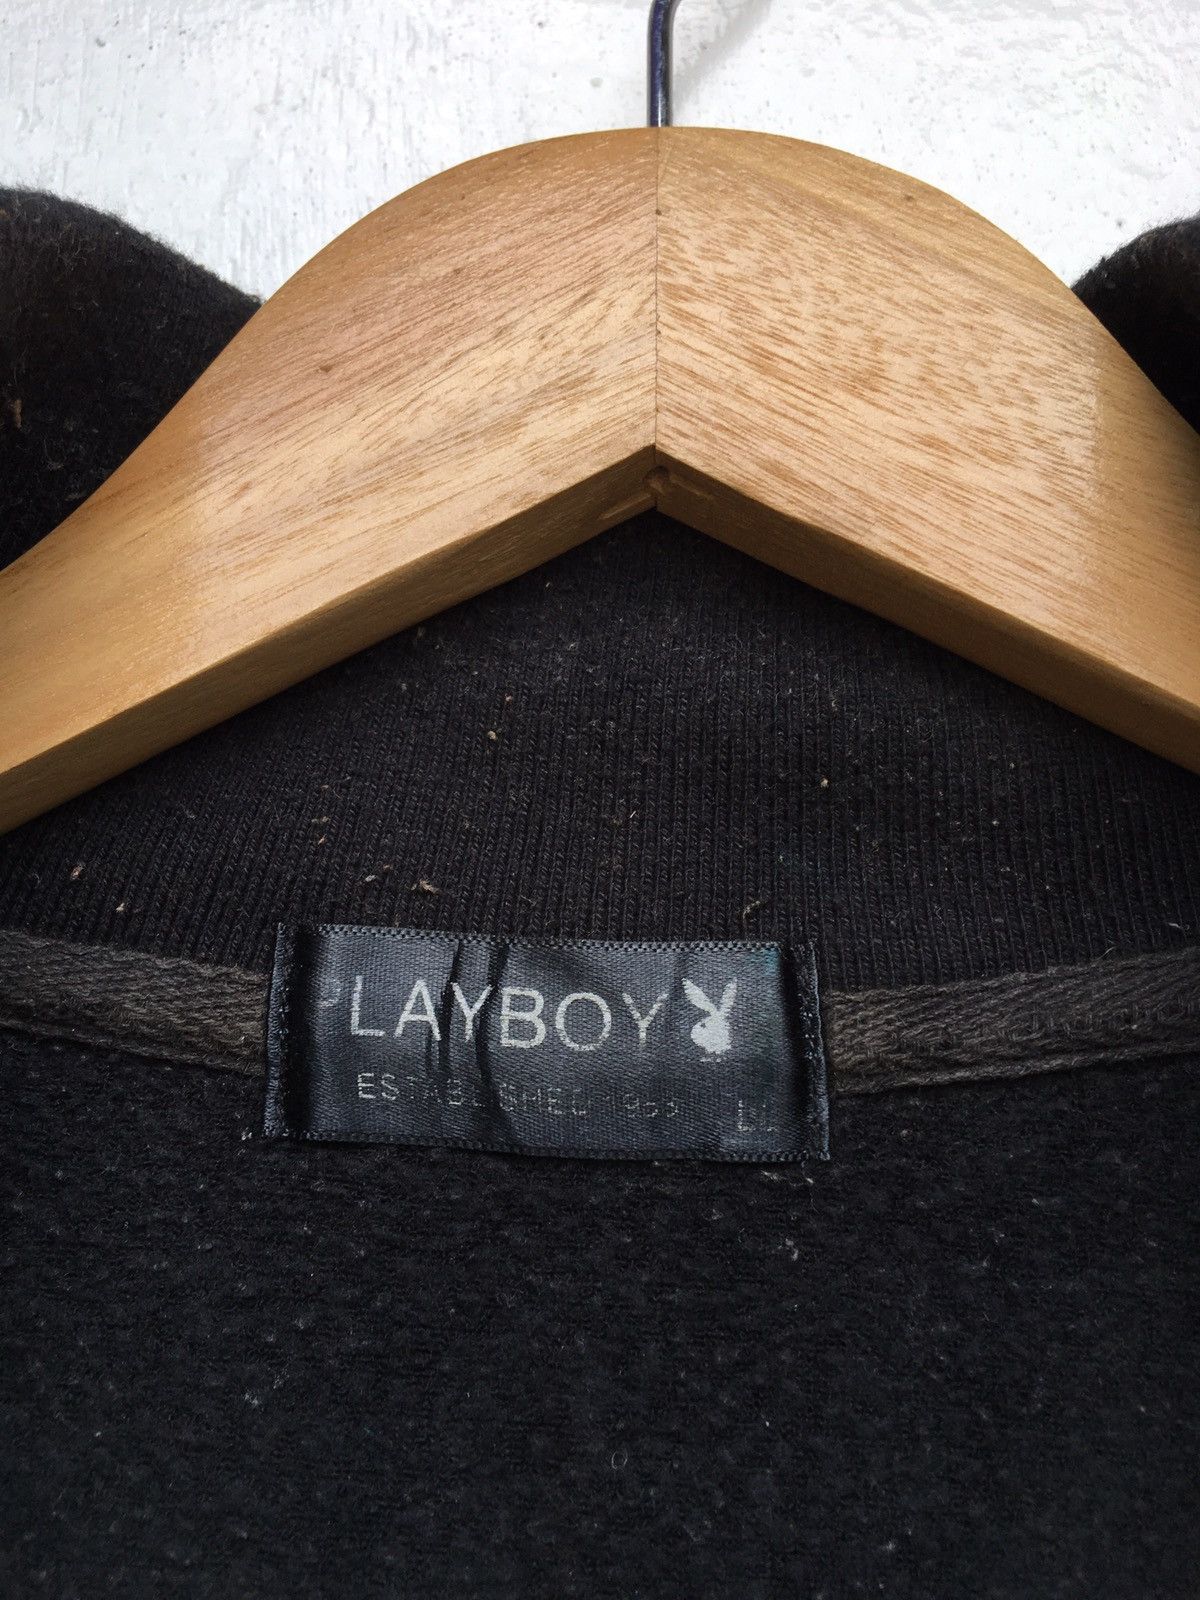 Vintage Rare Playboy Big Logo Spellout Zip Up Sweater Size US L / EU 52-54 / 3 - 10 Thumbnail